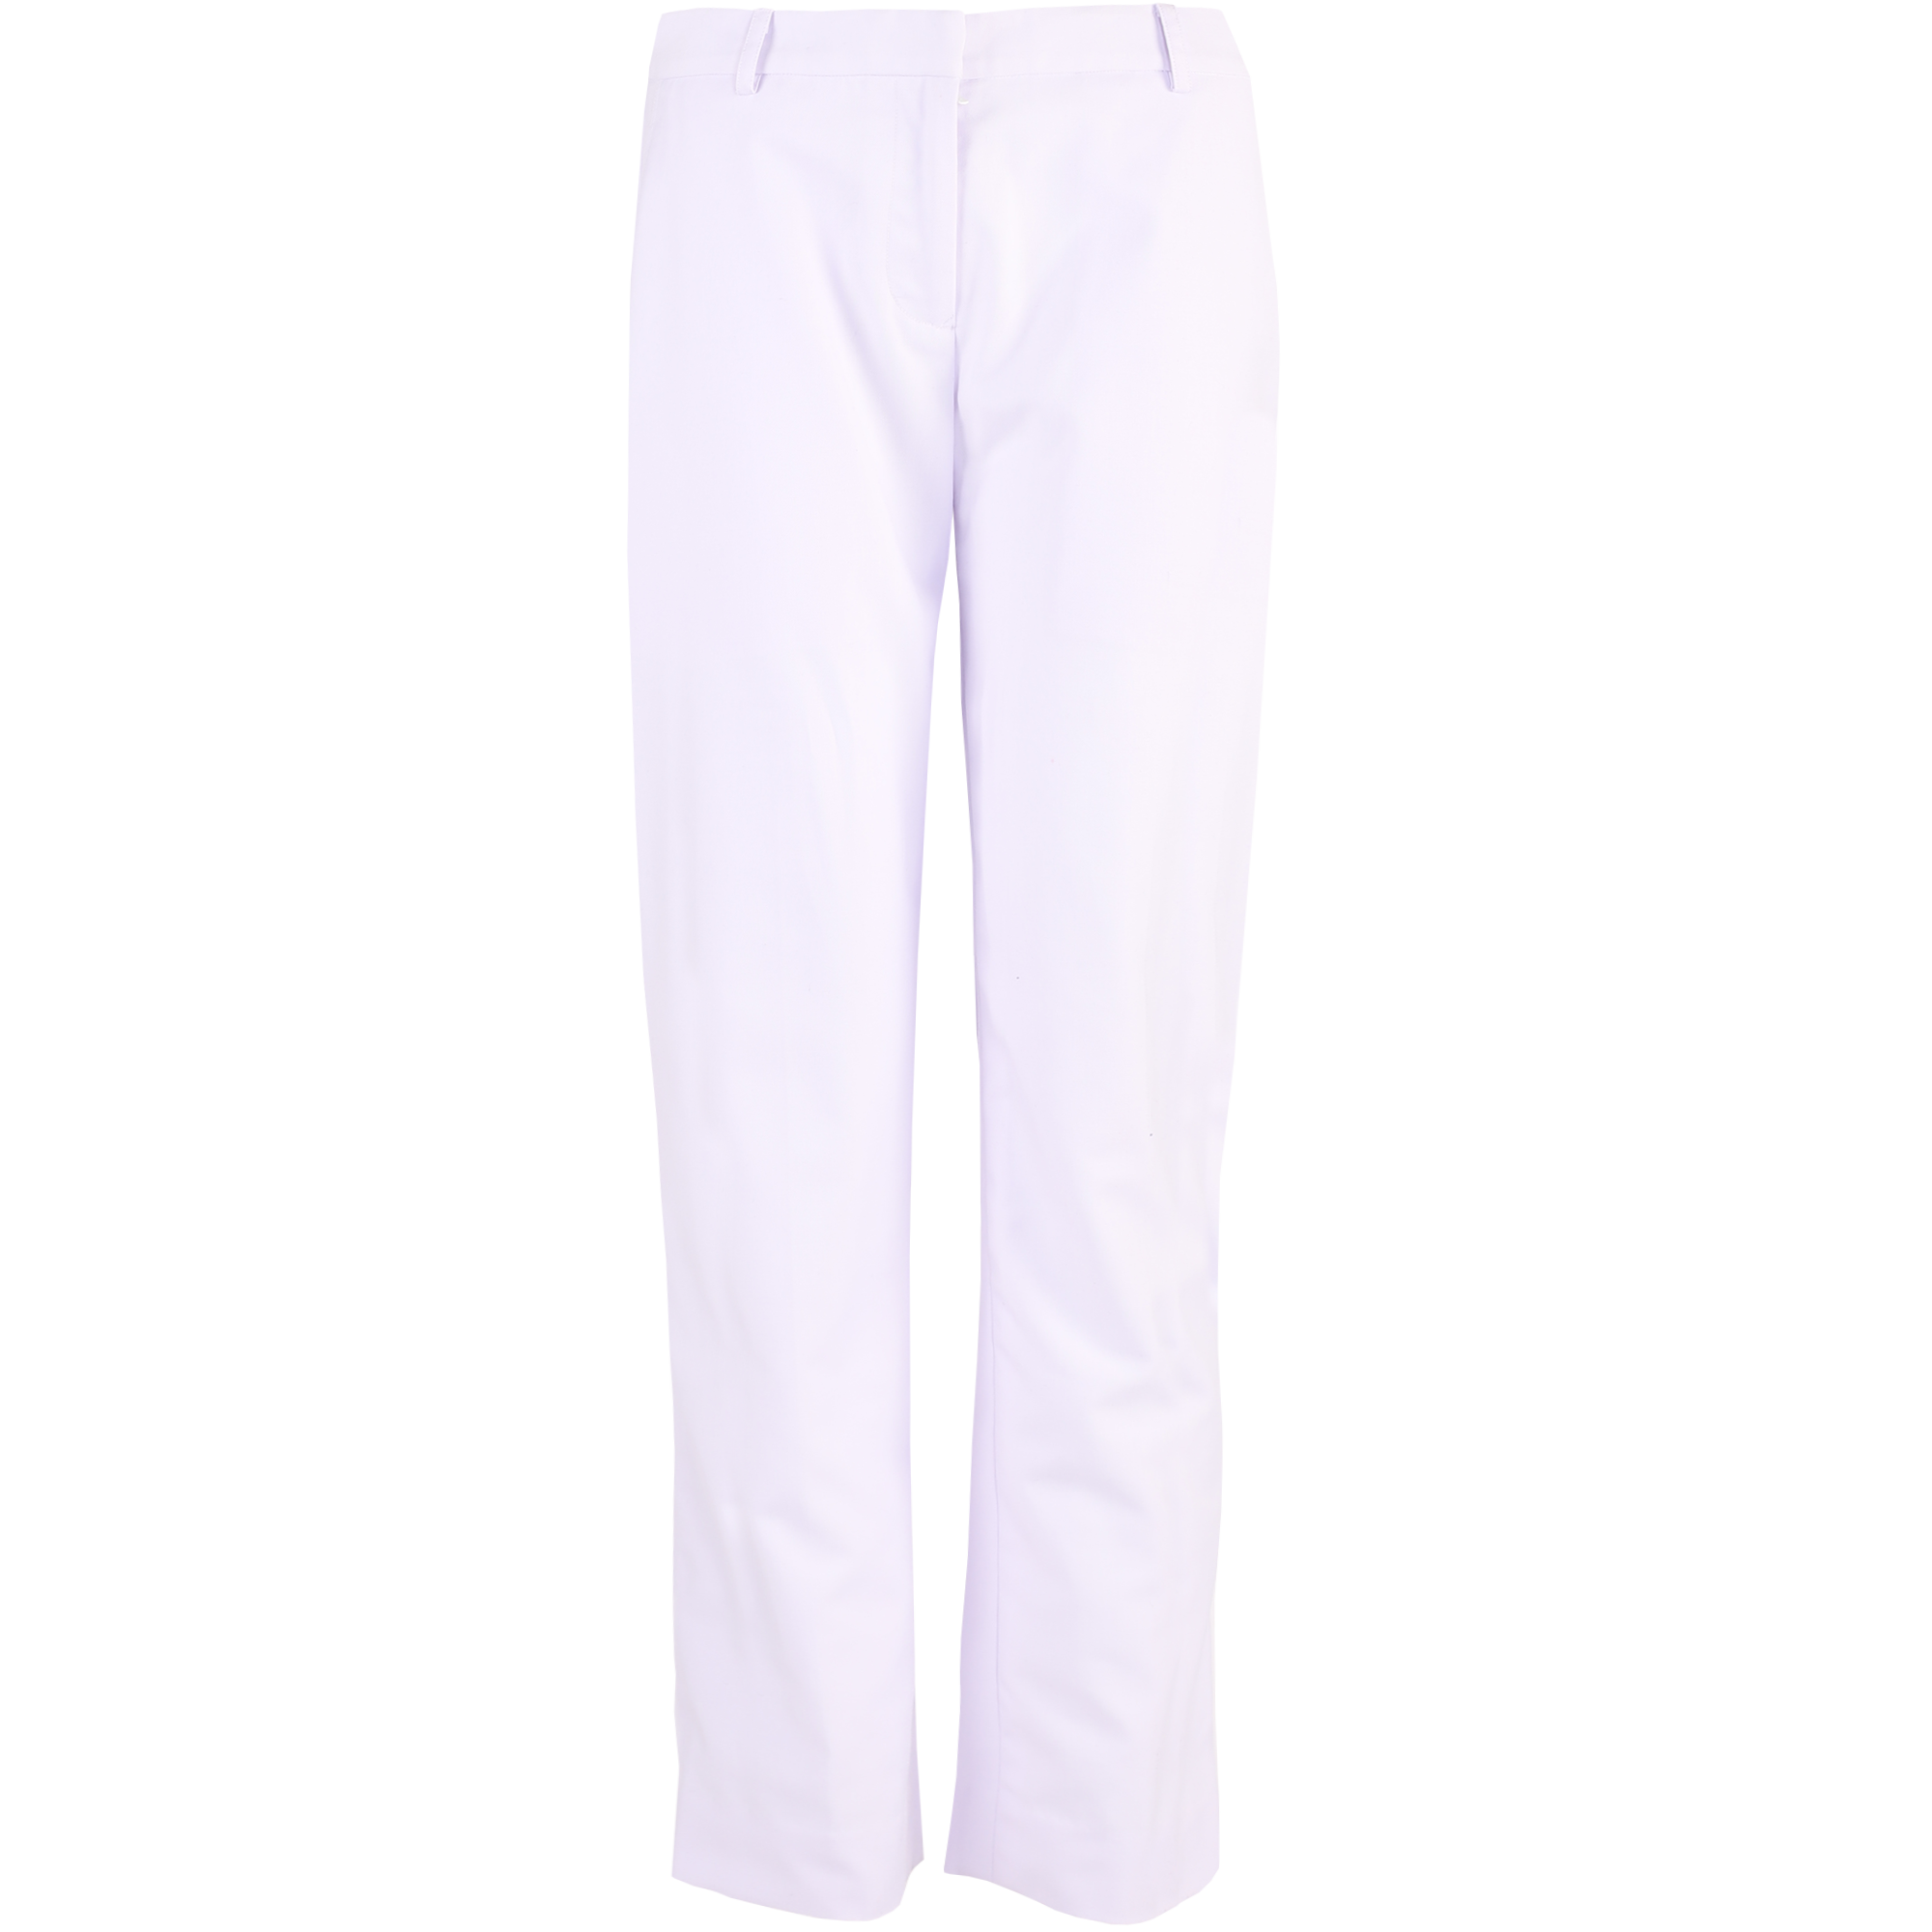 Buy UJEAVETTE® Women Nurse Work Clothing Nursing Uniform Top And Pants  Scrub Kit V Neck Top L Light Blue at Amazon.in